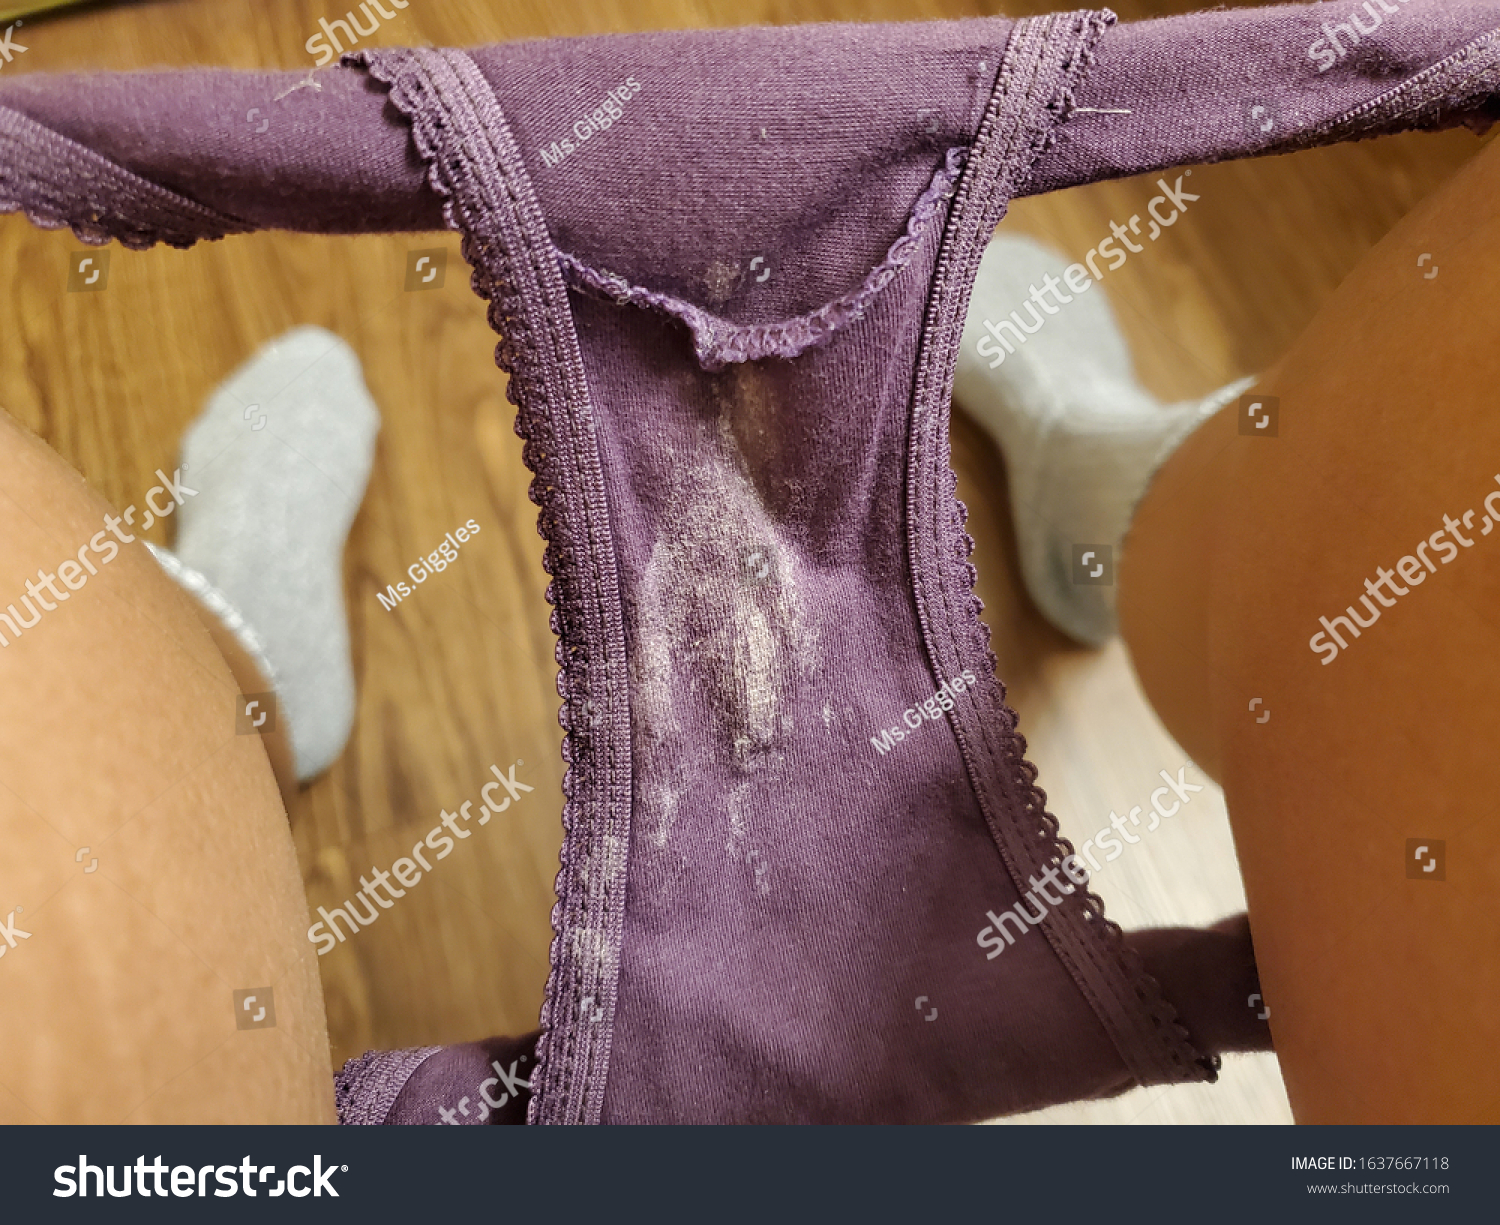 Panty discharge pics